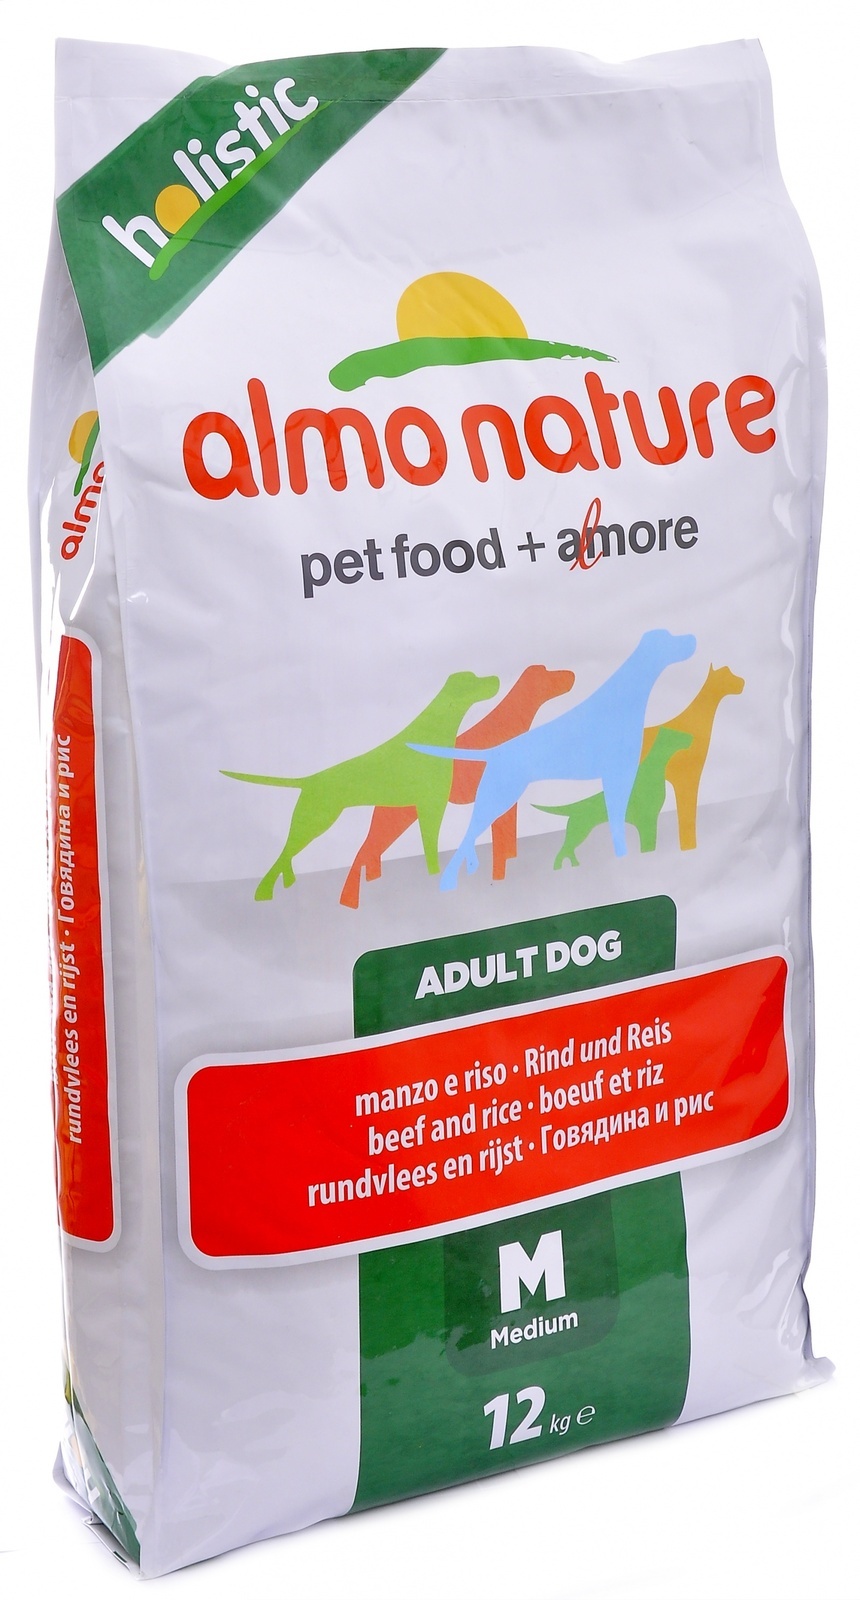 Корм для собак almo. Almo nature корм для собак. Сухой корм для собак Альма натюр. Almo nature для собак сухой корм. Almo nature Holistic для собак говядина 12 кг.